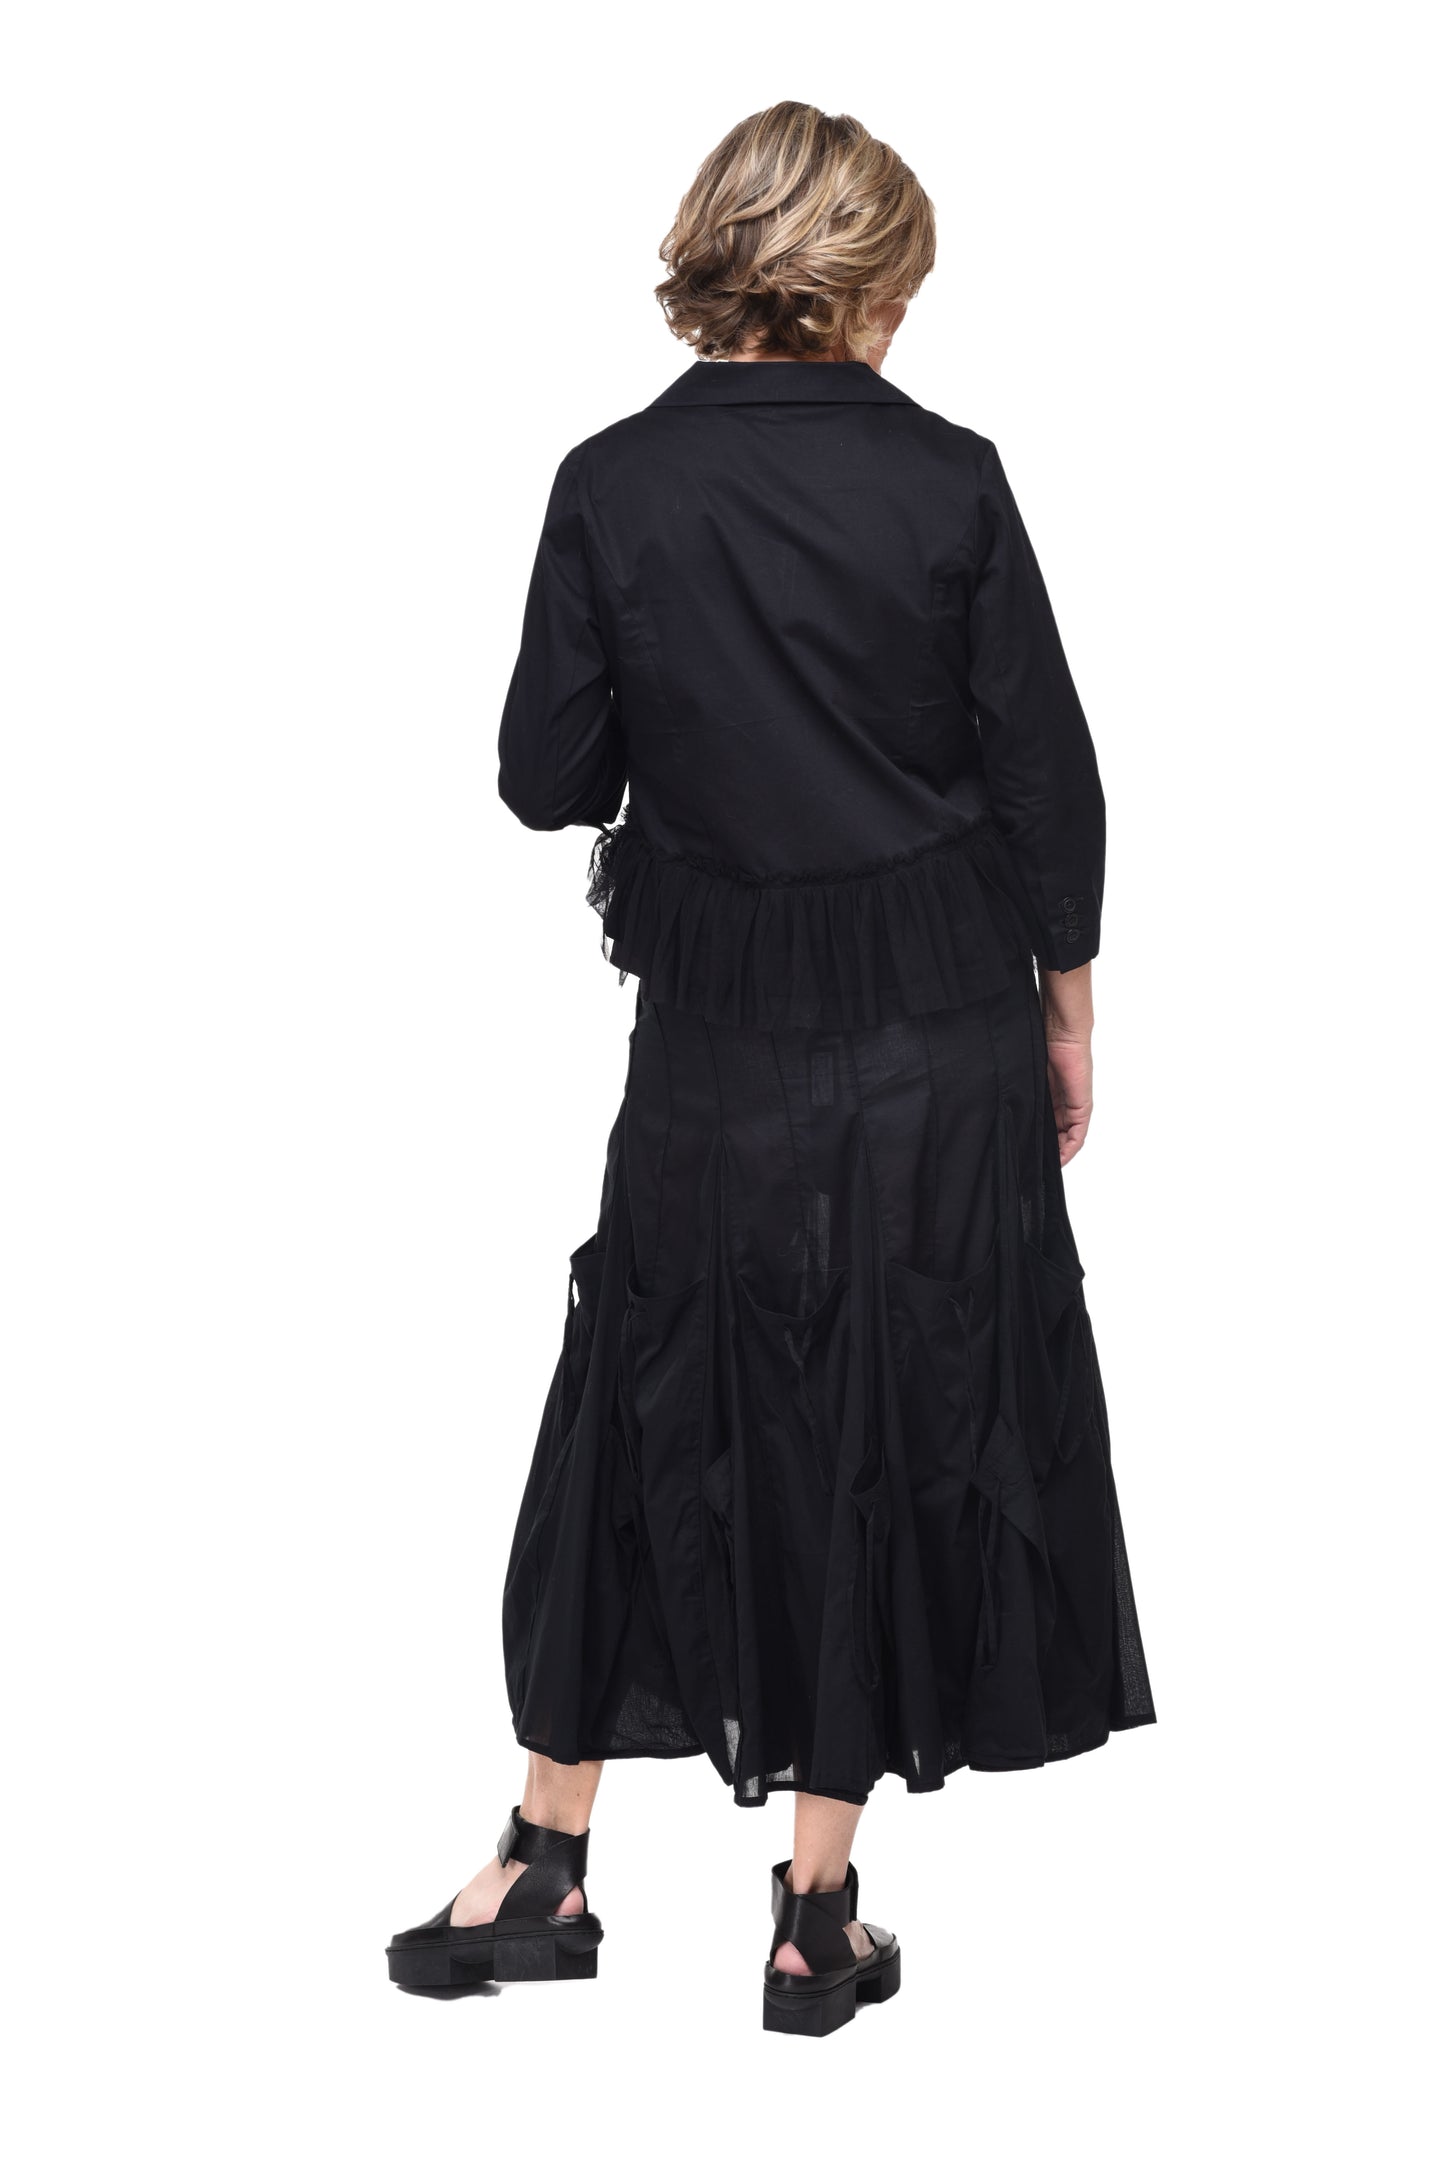 CV101 Alexus Skirt in Black